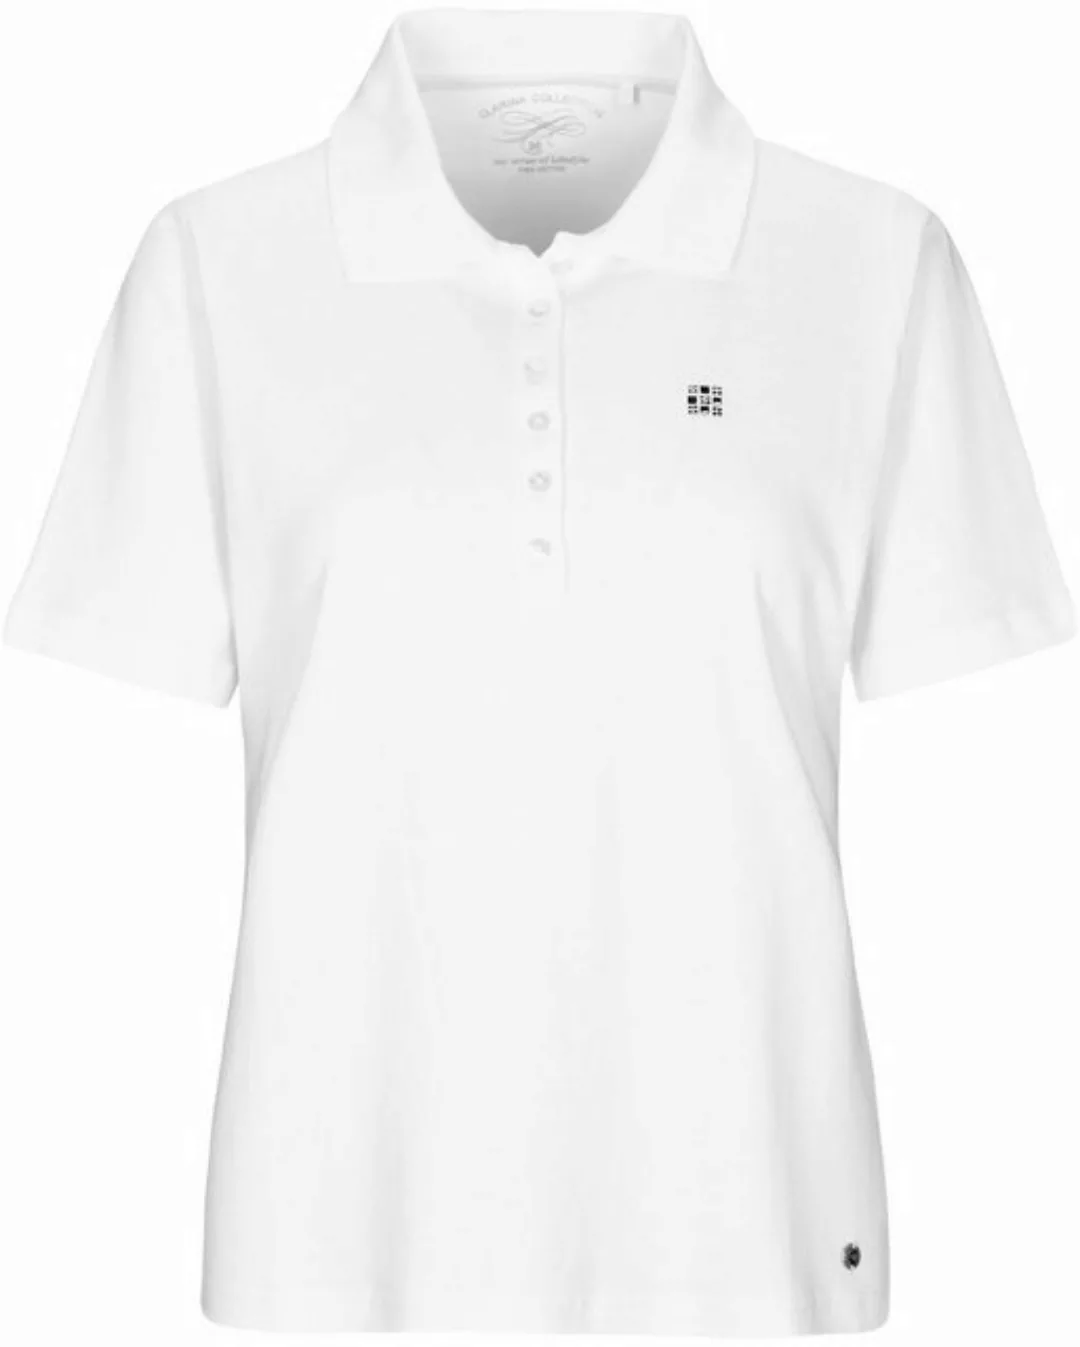 Clarina Poloshirt Poloshirt günstig online kaufen